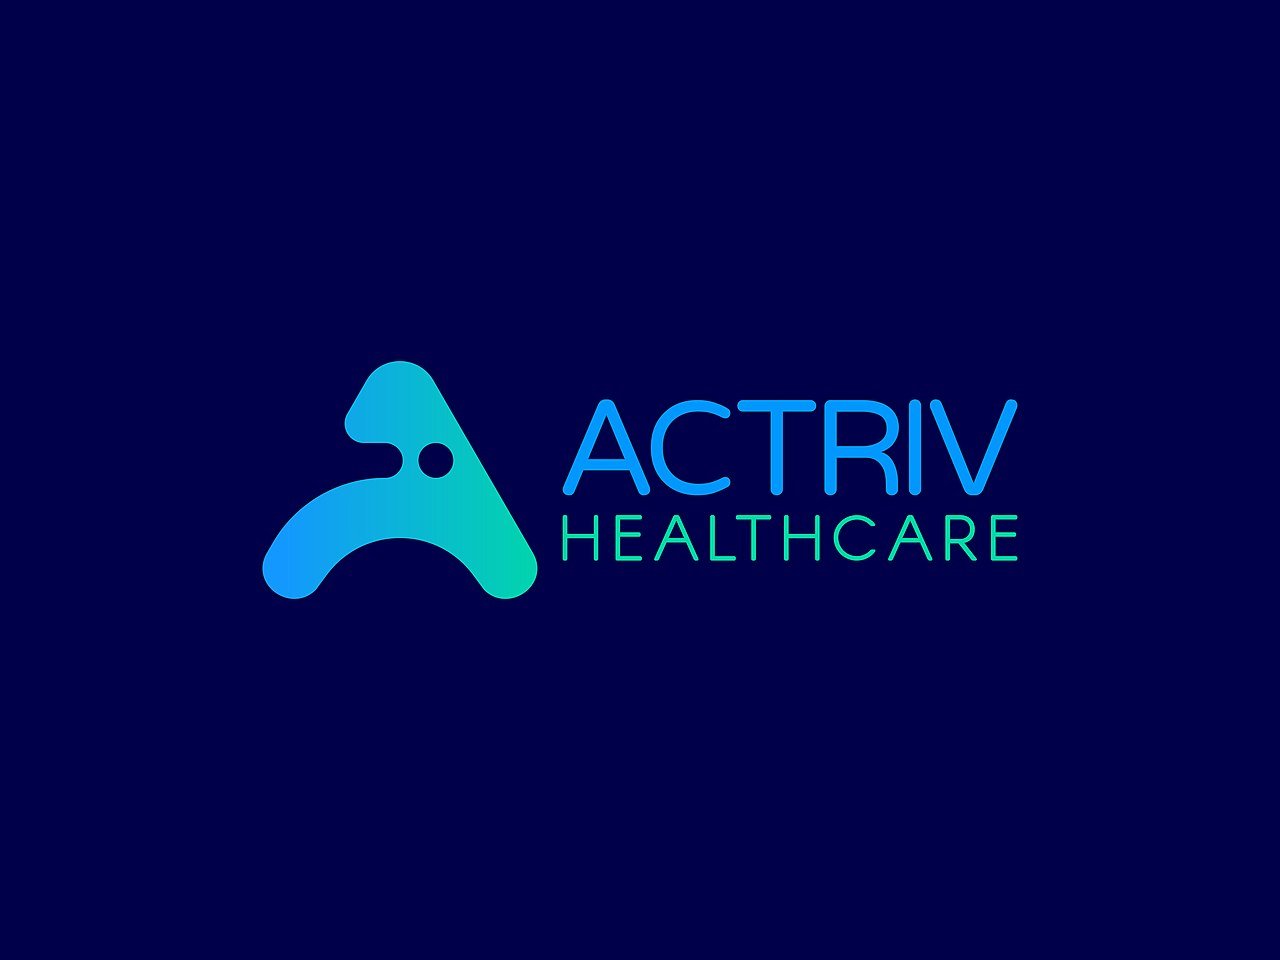 Actriv Healthcare